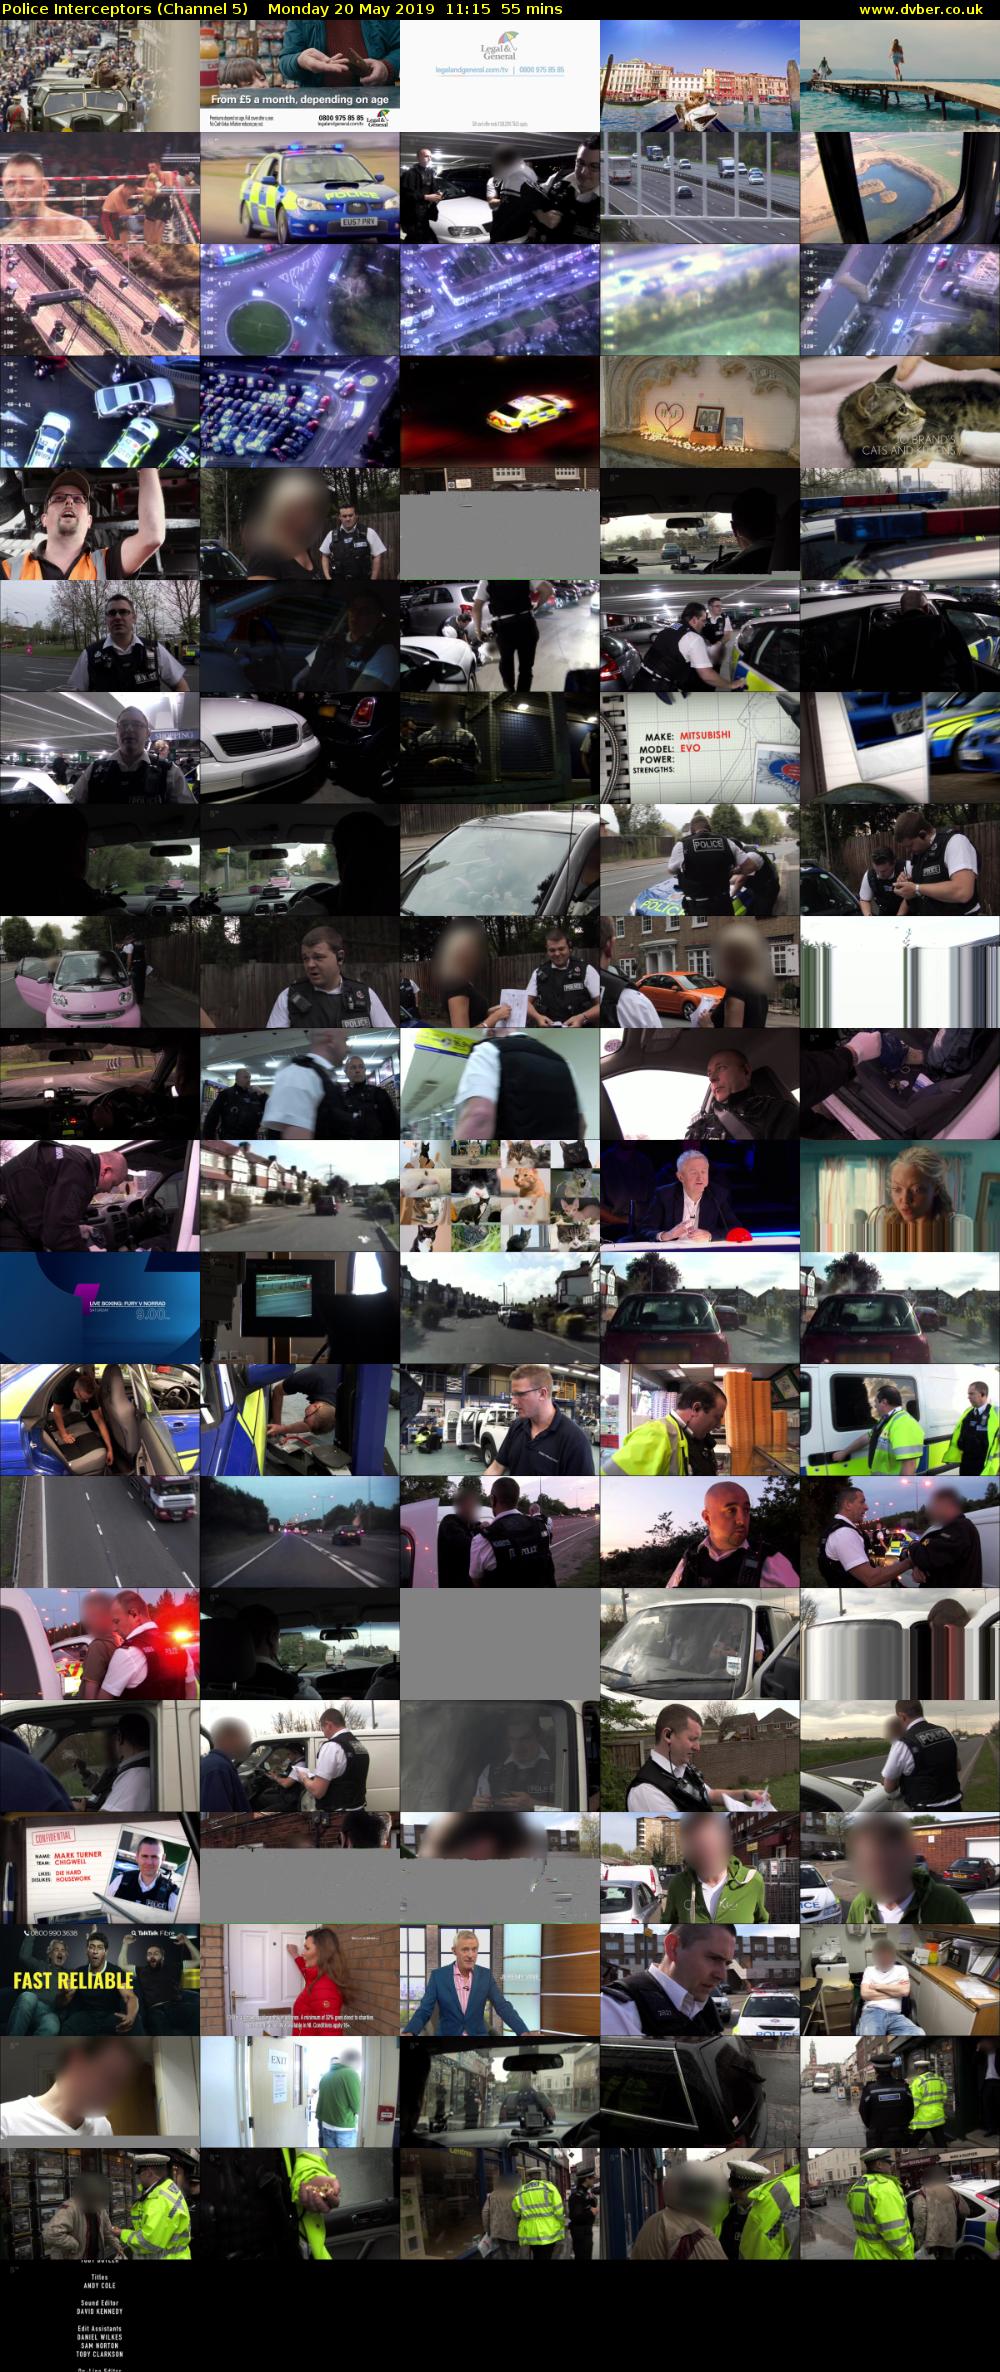 Police Interceptors (Channel 5) Monday 20 May 2019 11:15 - 12:10